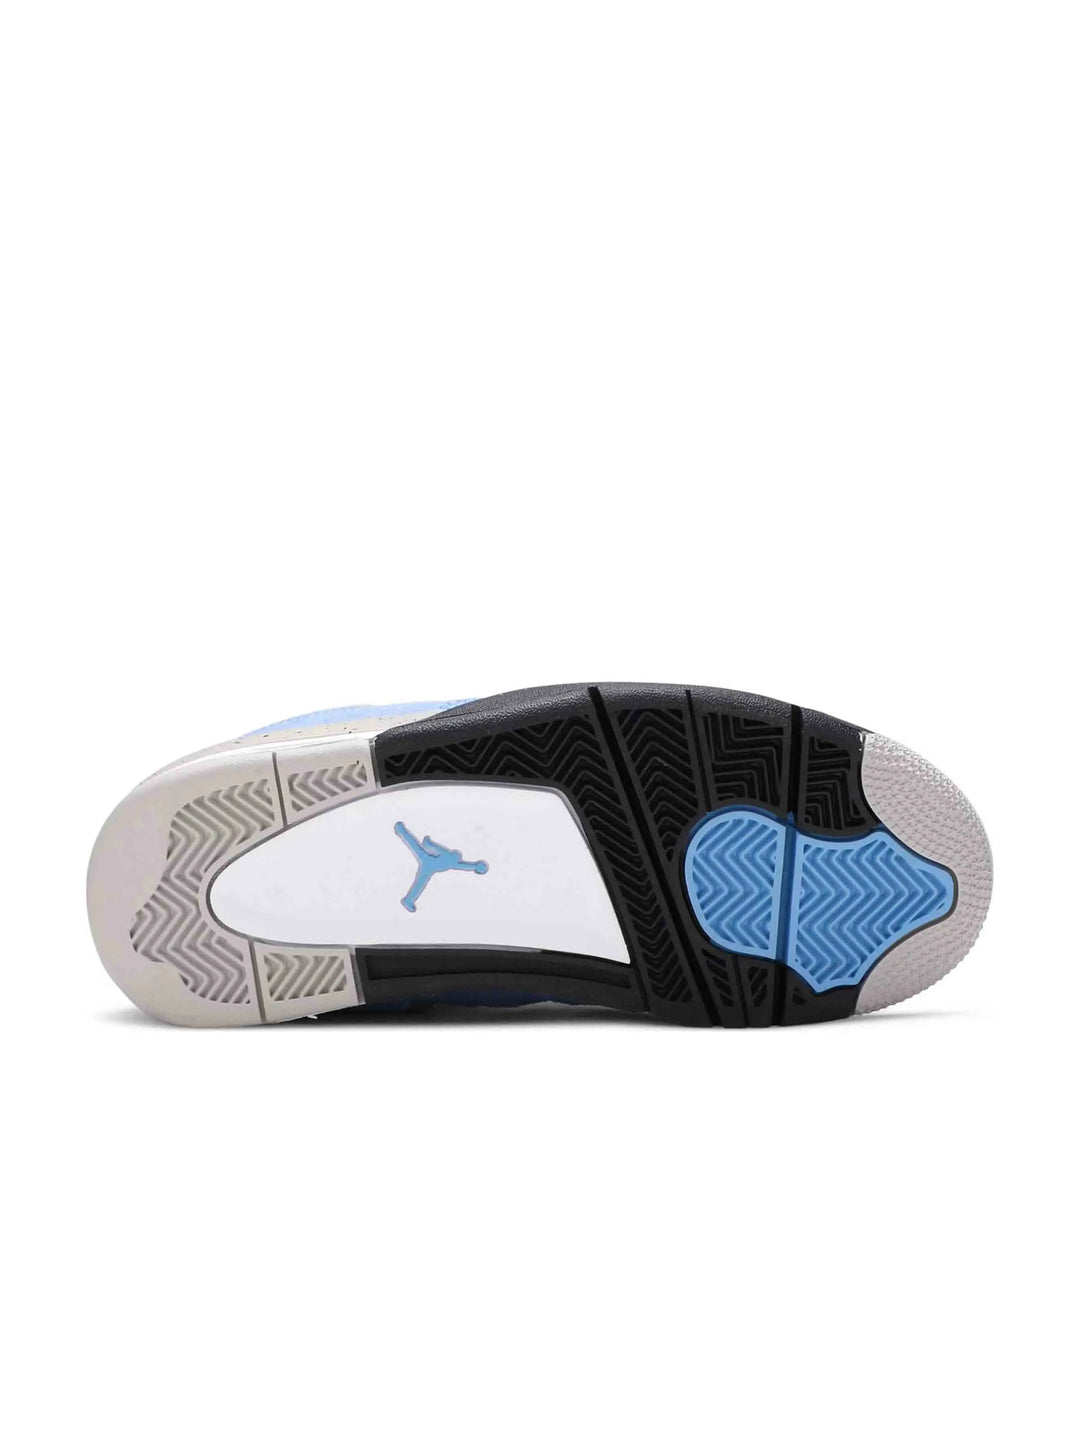 Nike Air Jordan 4 Retro University Blue (GS) Prior